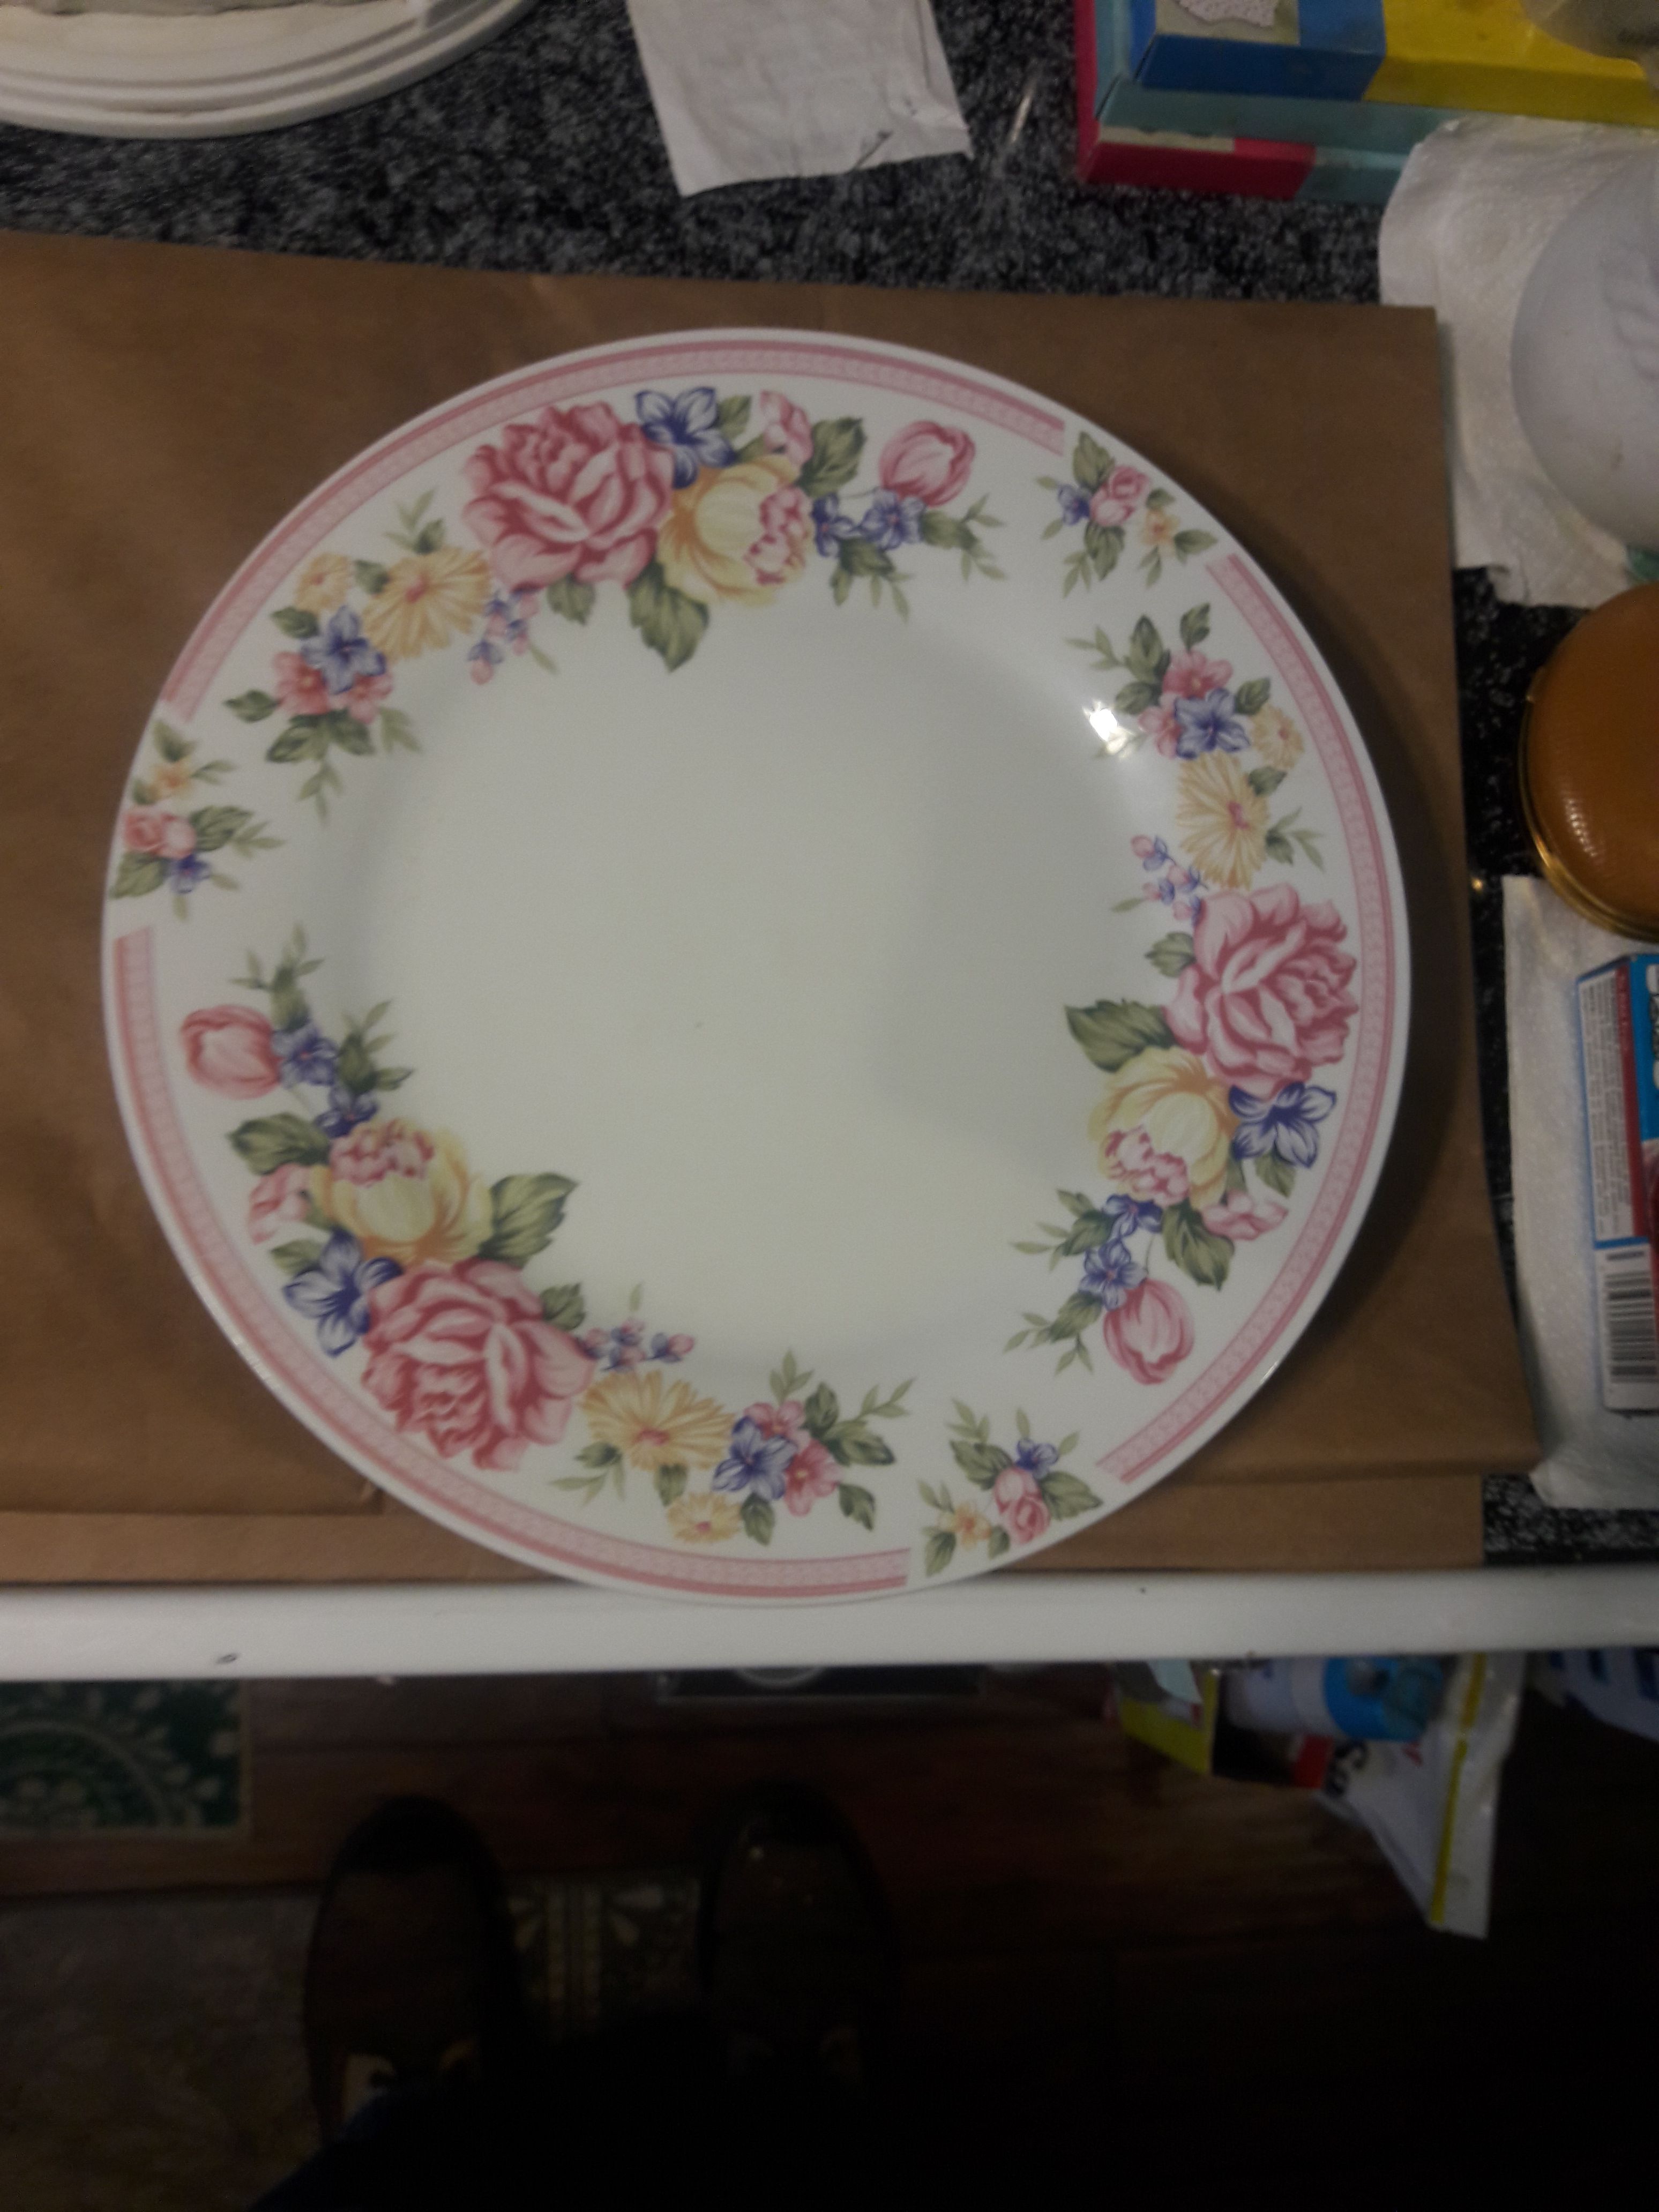 Plates, set of 4, 10.5" Dia., "China Pearl"